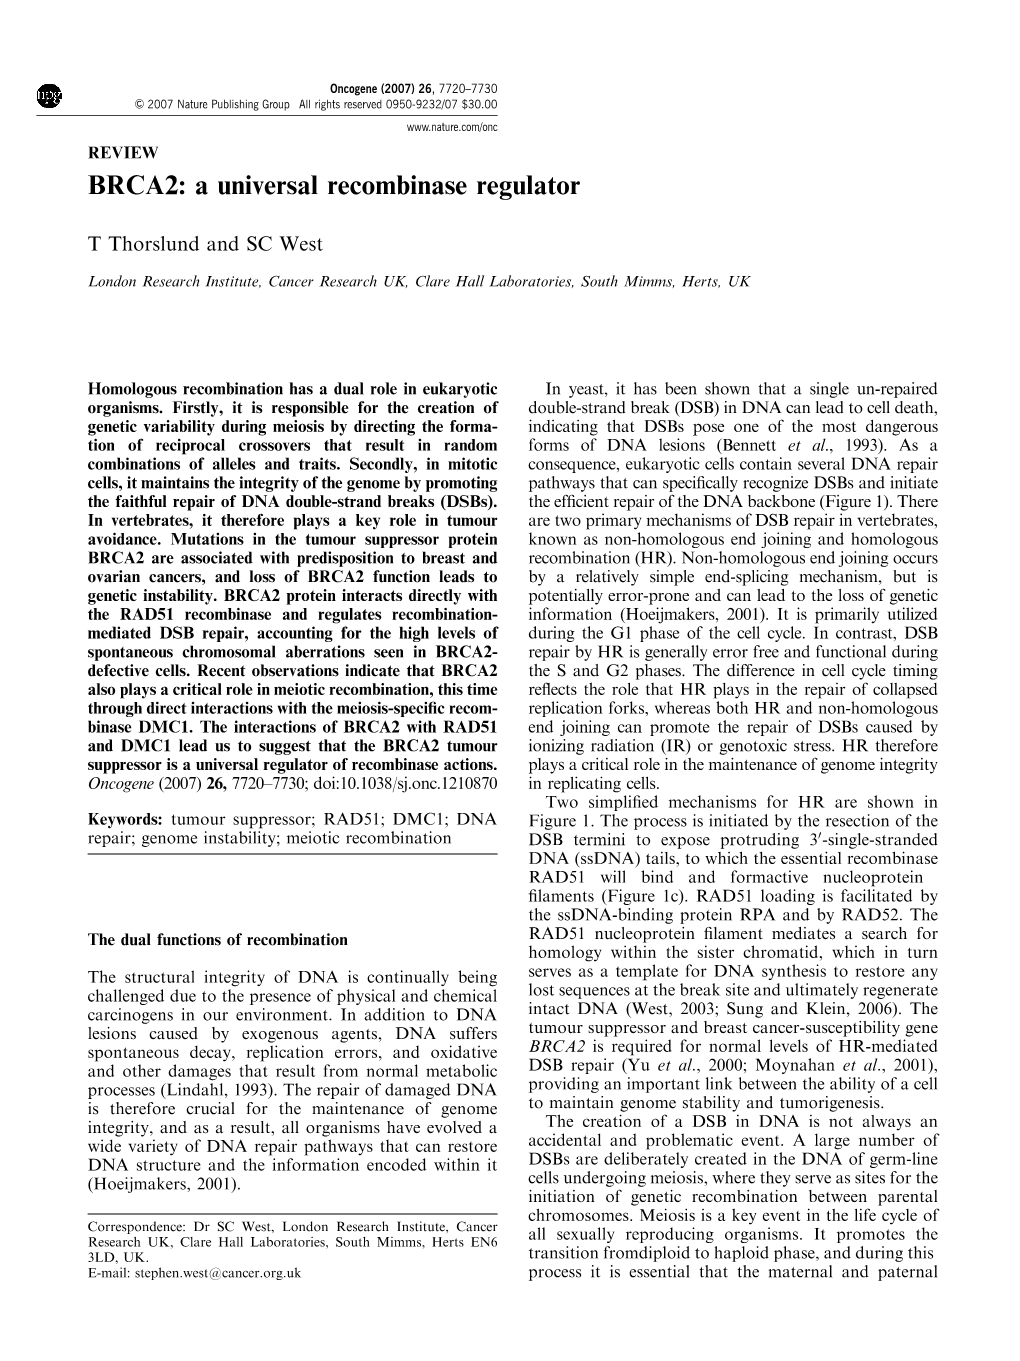 BRCA2: a Universal Recombinase Regulator